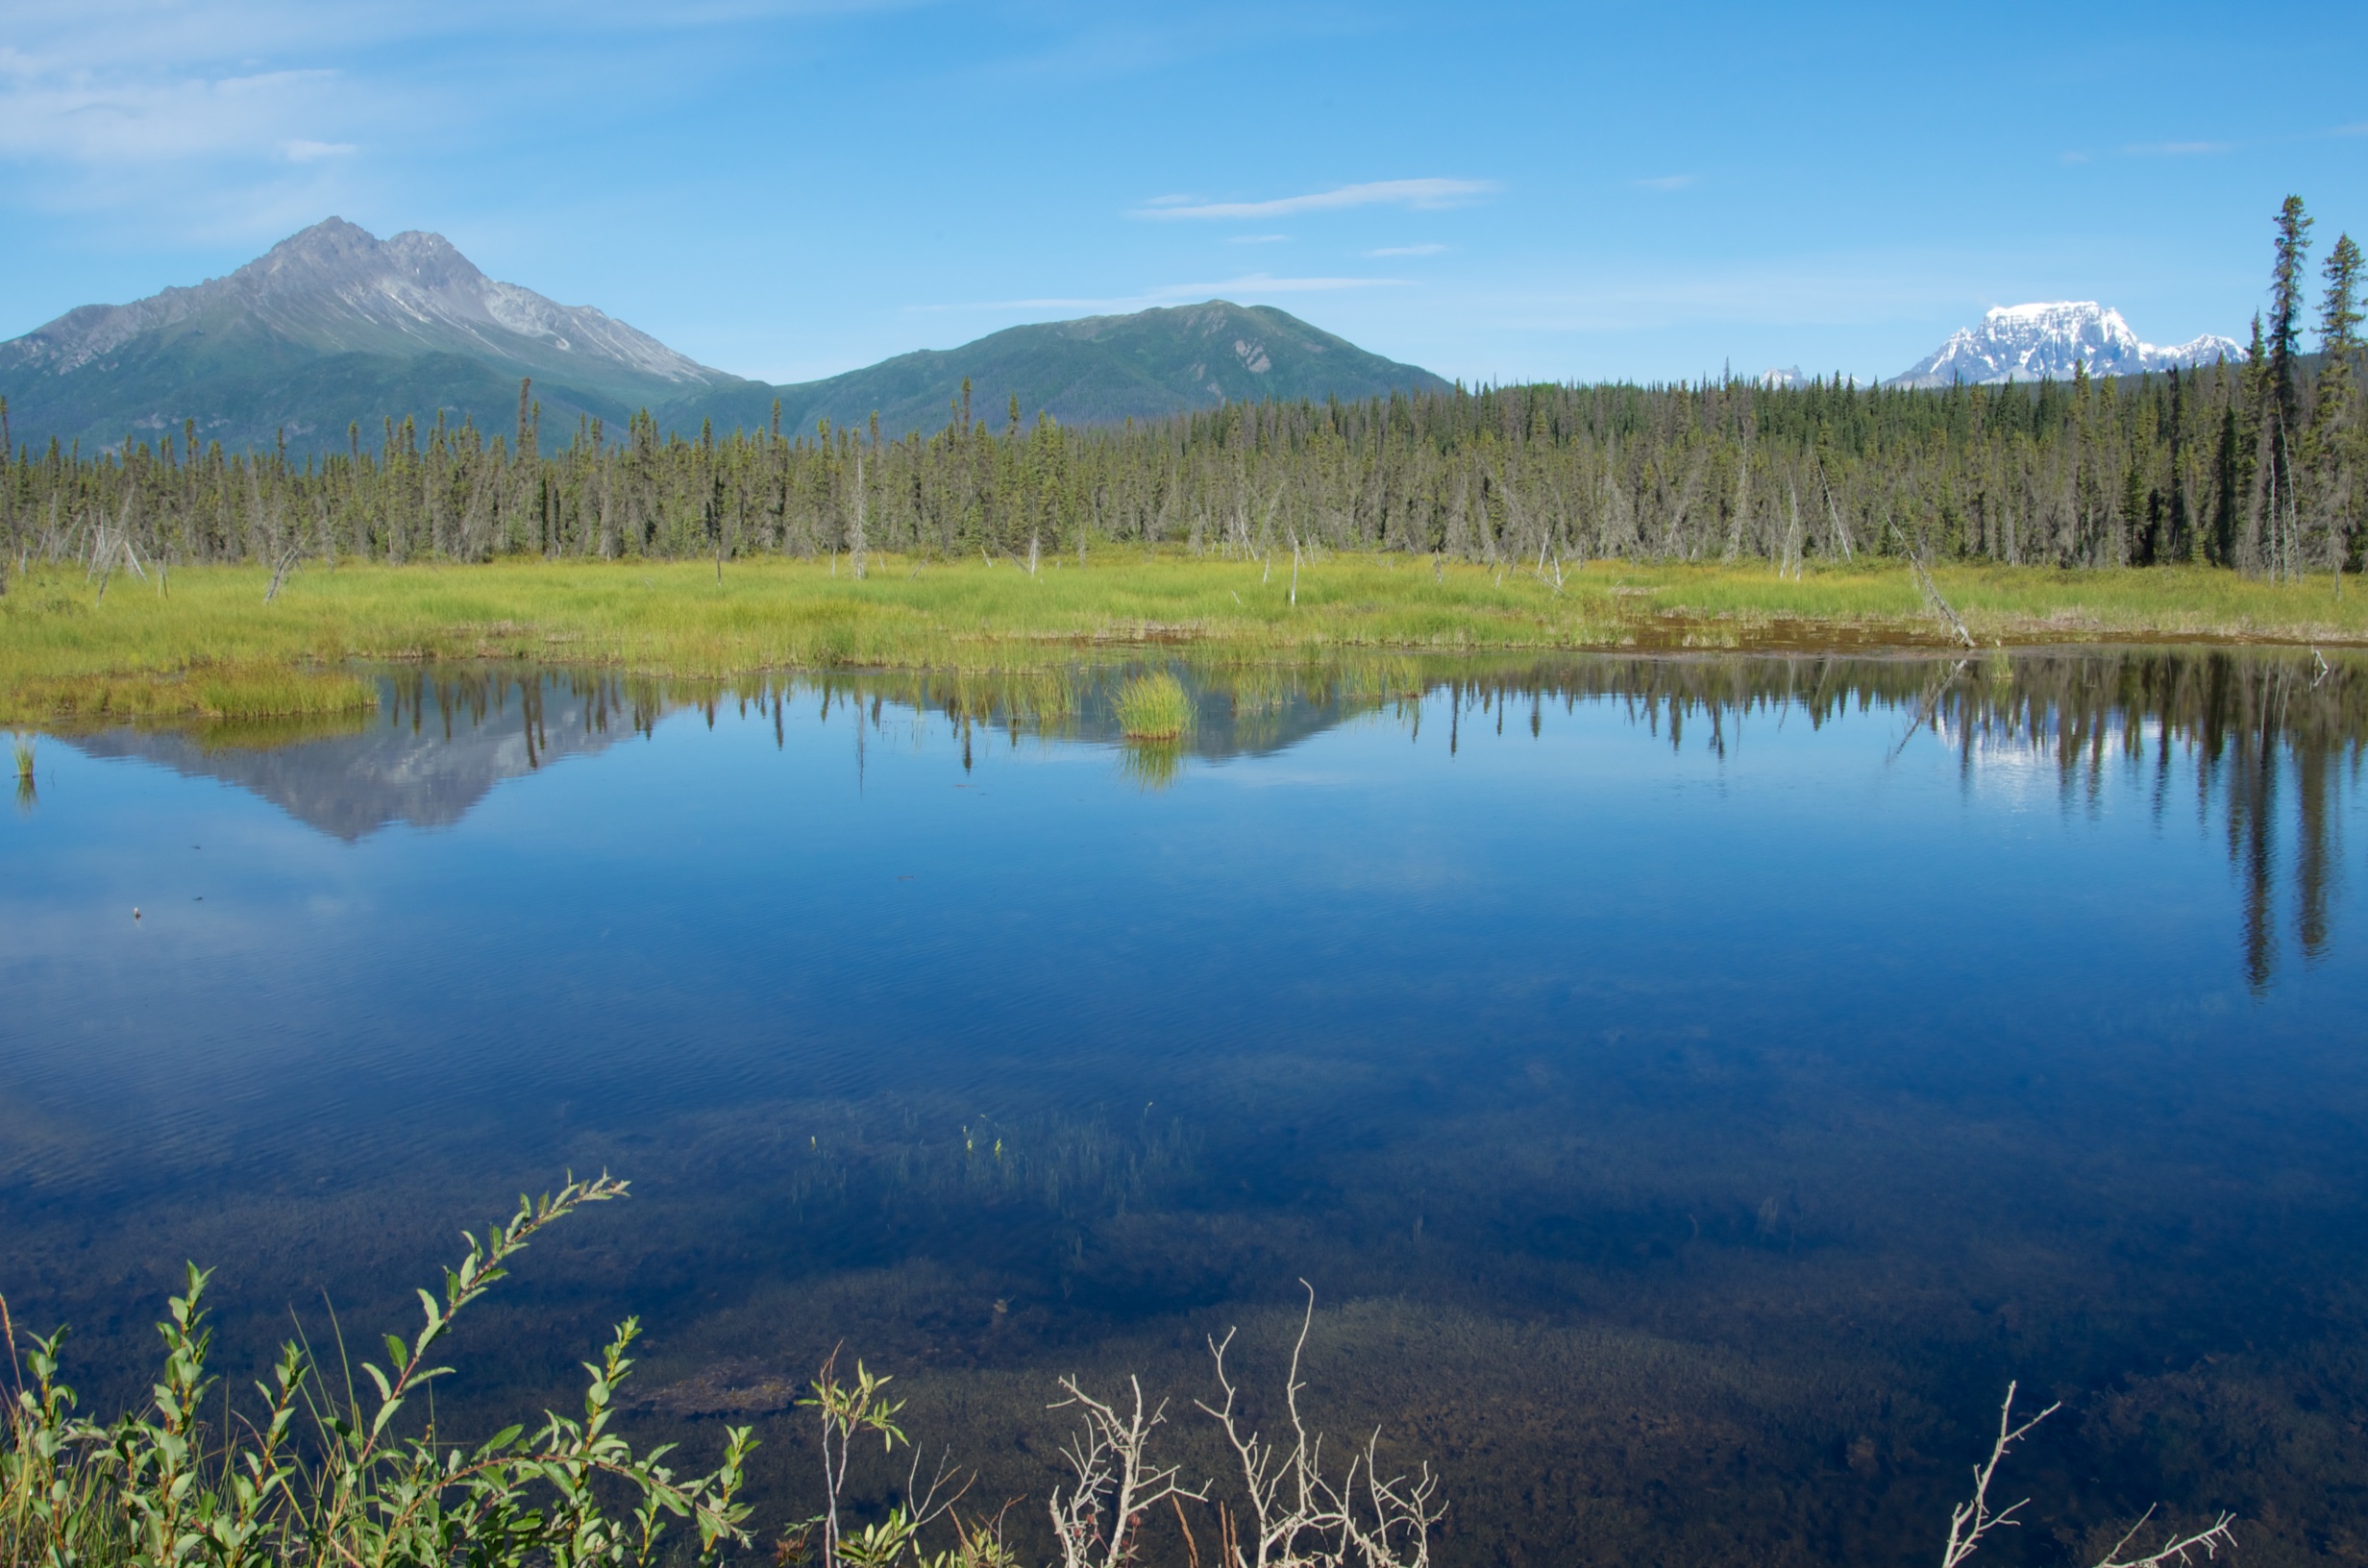  Reflections on lake, Wrangell St Elias NP, Alaska 